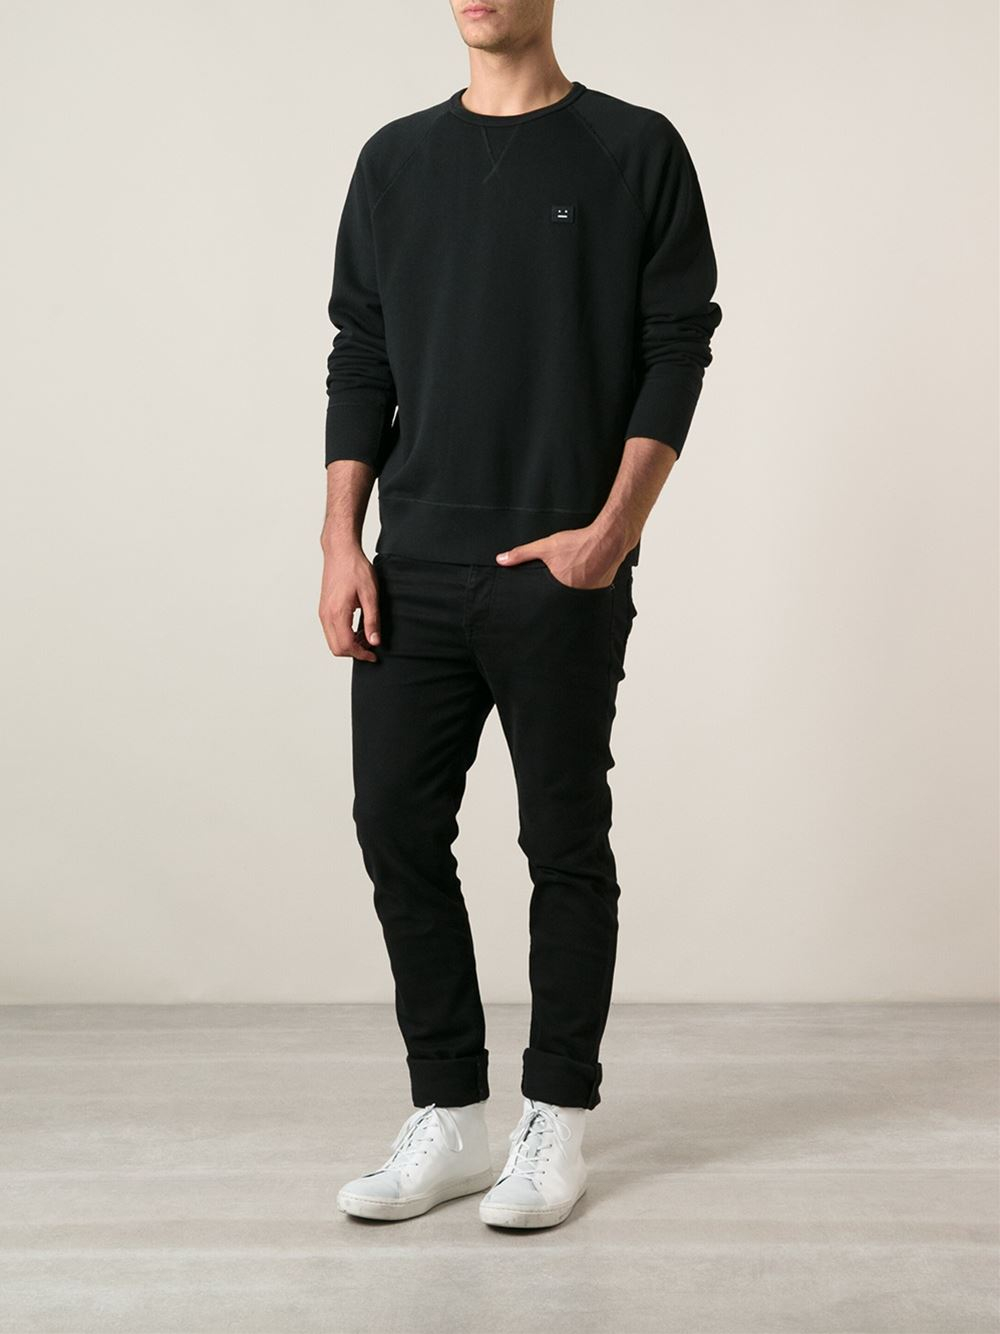 Acne Studios College Face Sweatshirt in Black for Men - Lyst